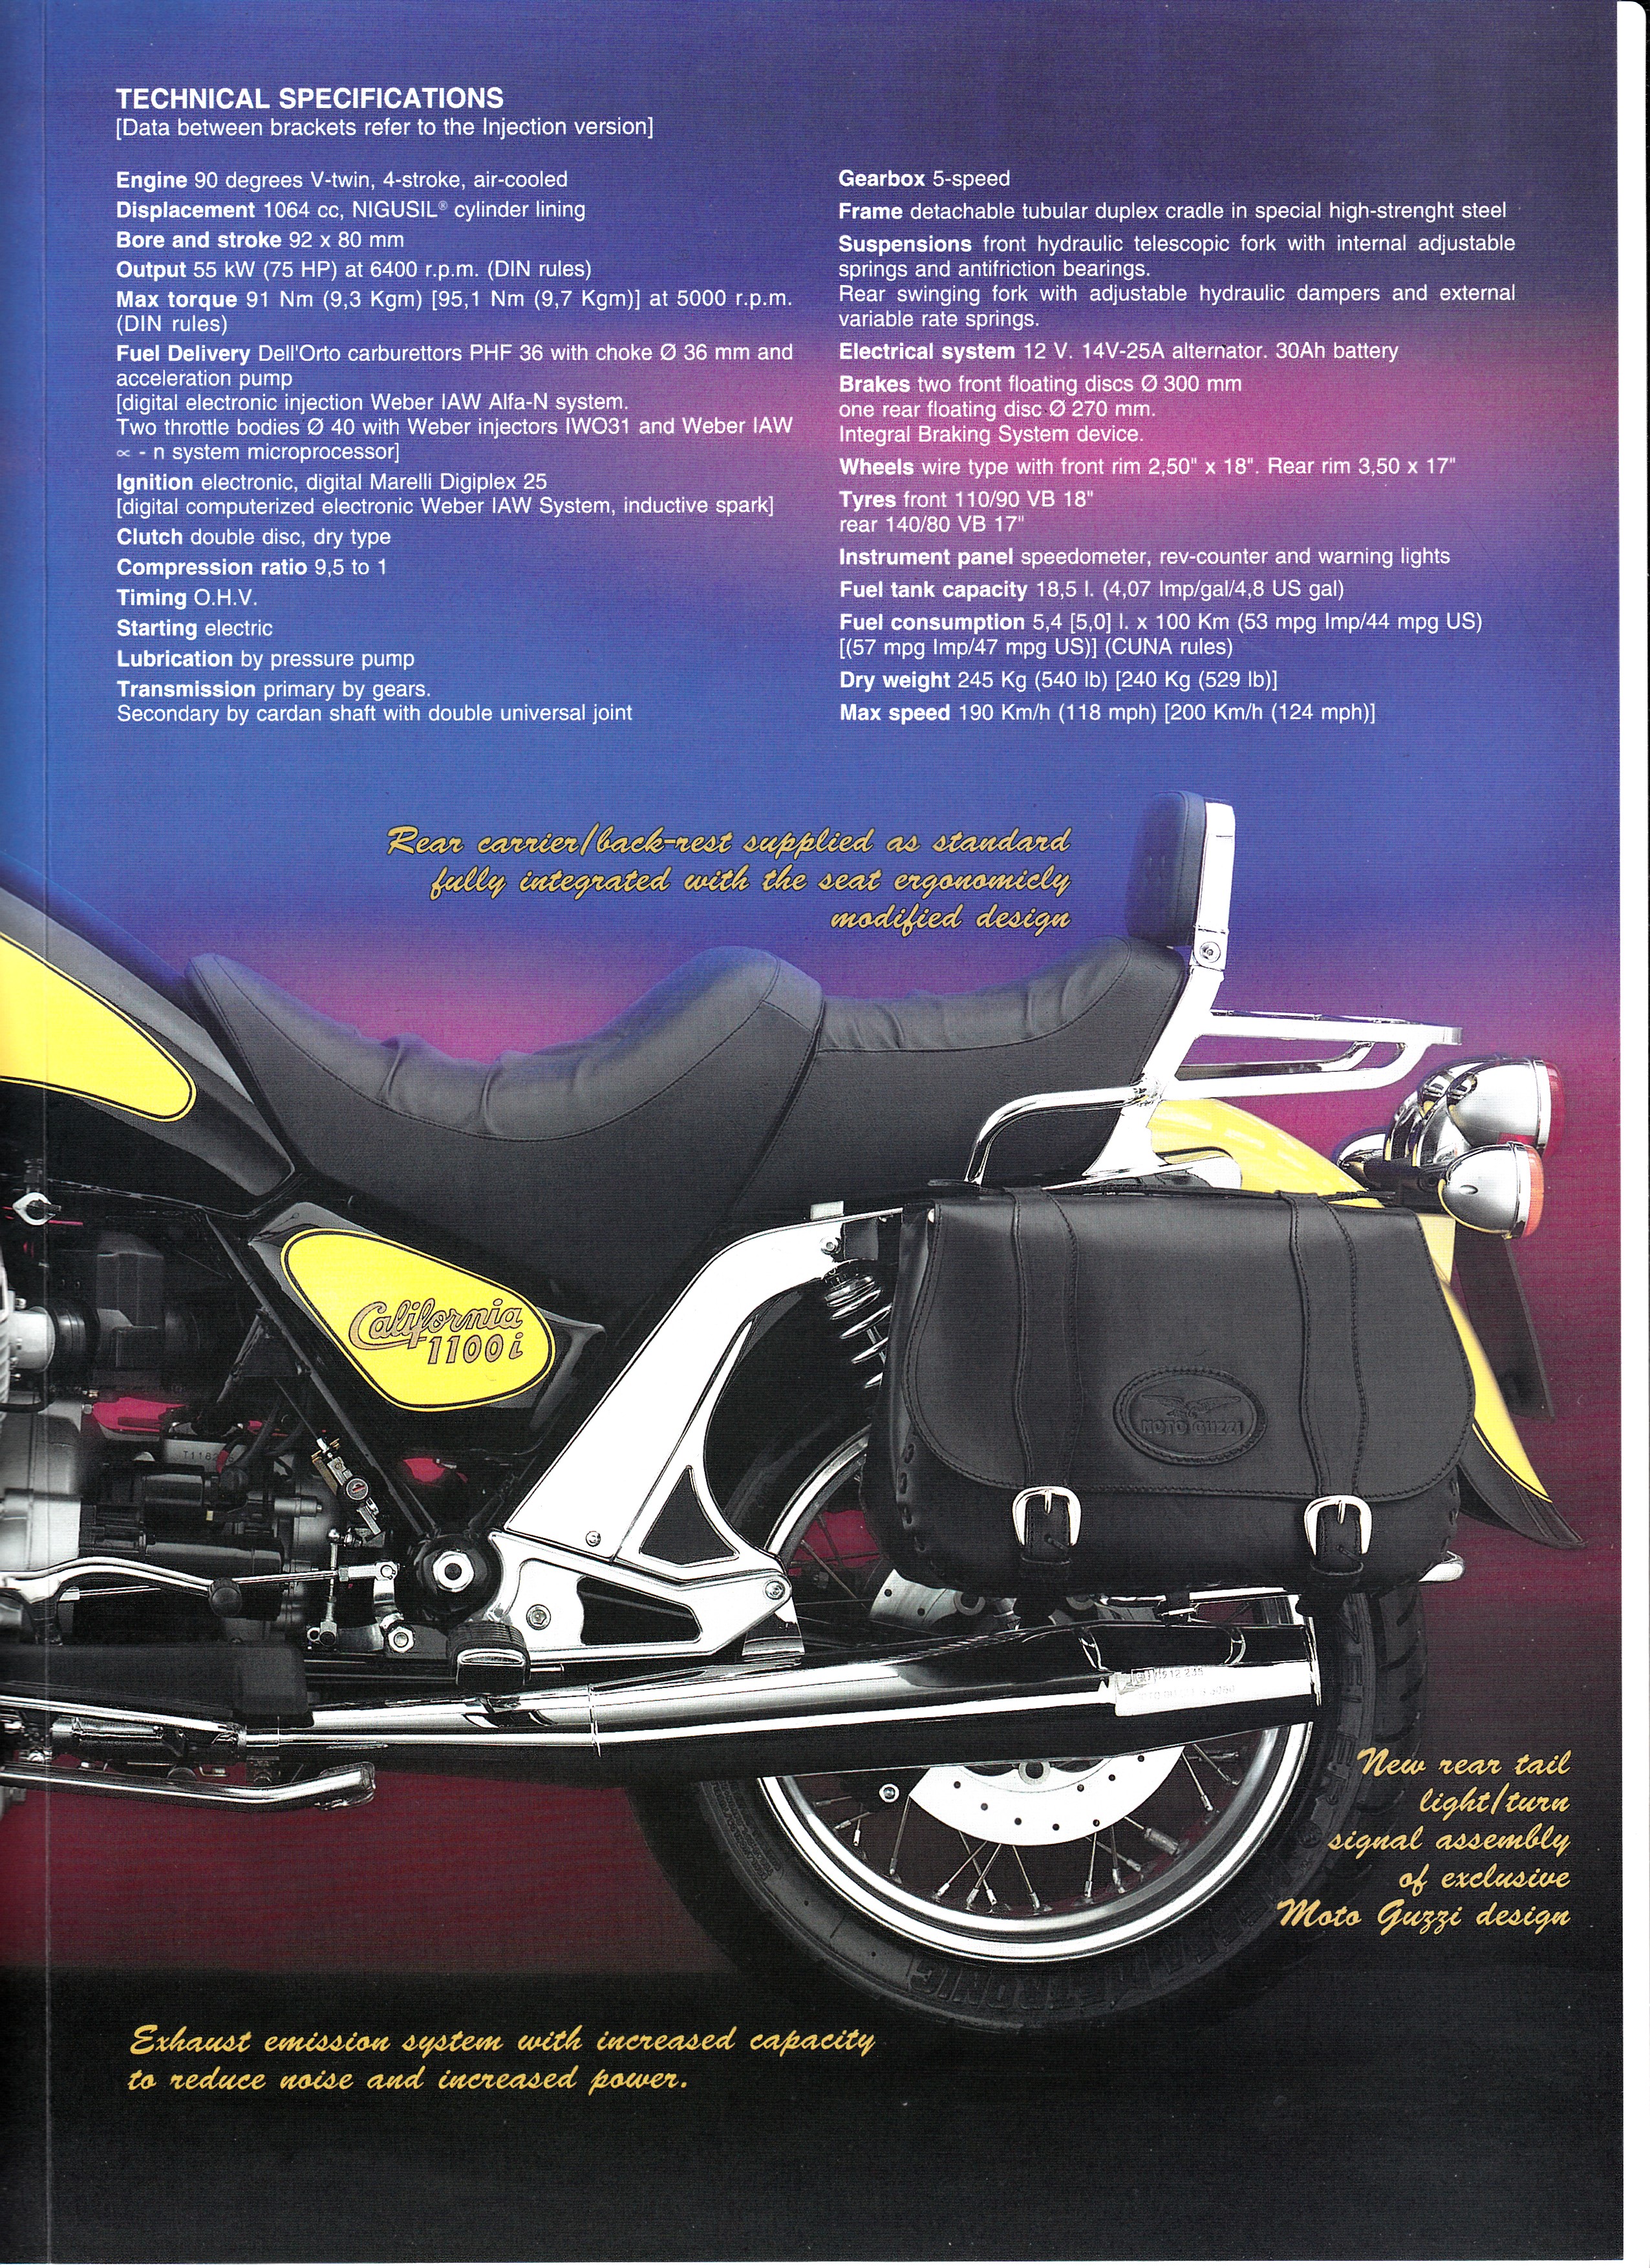 Moto Guzzi factory brochure: California 1100